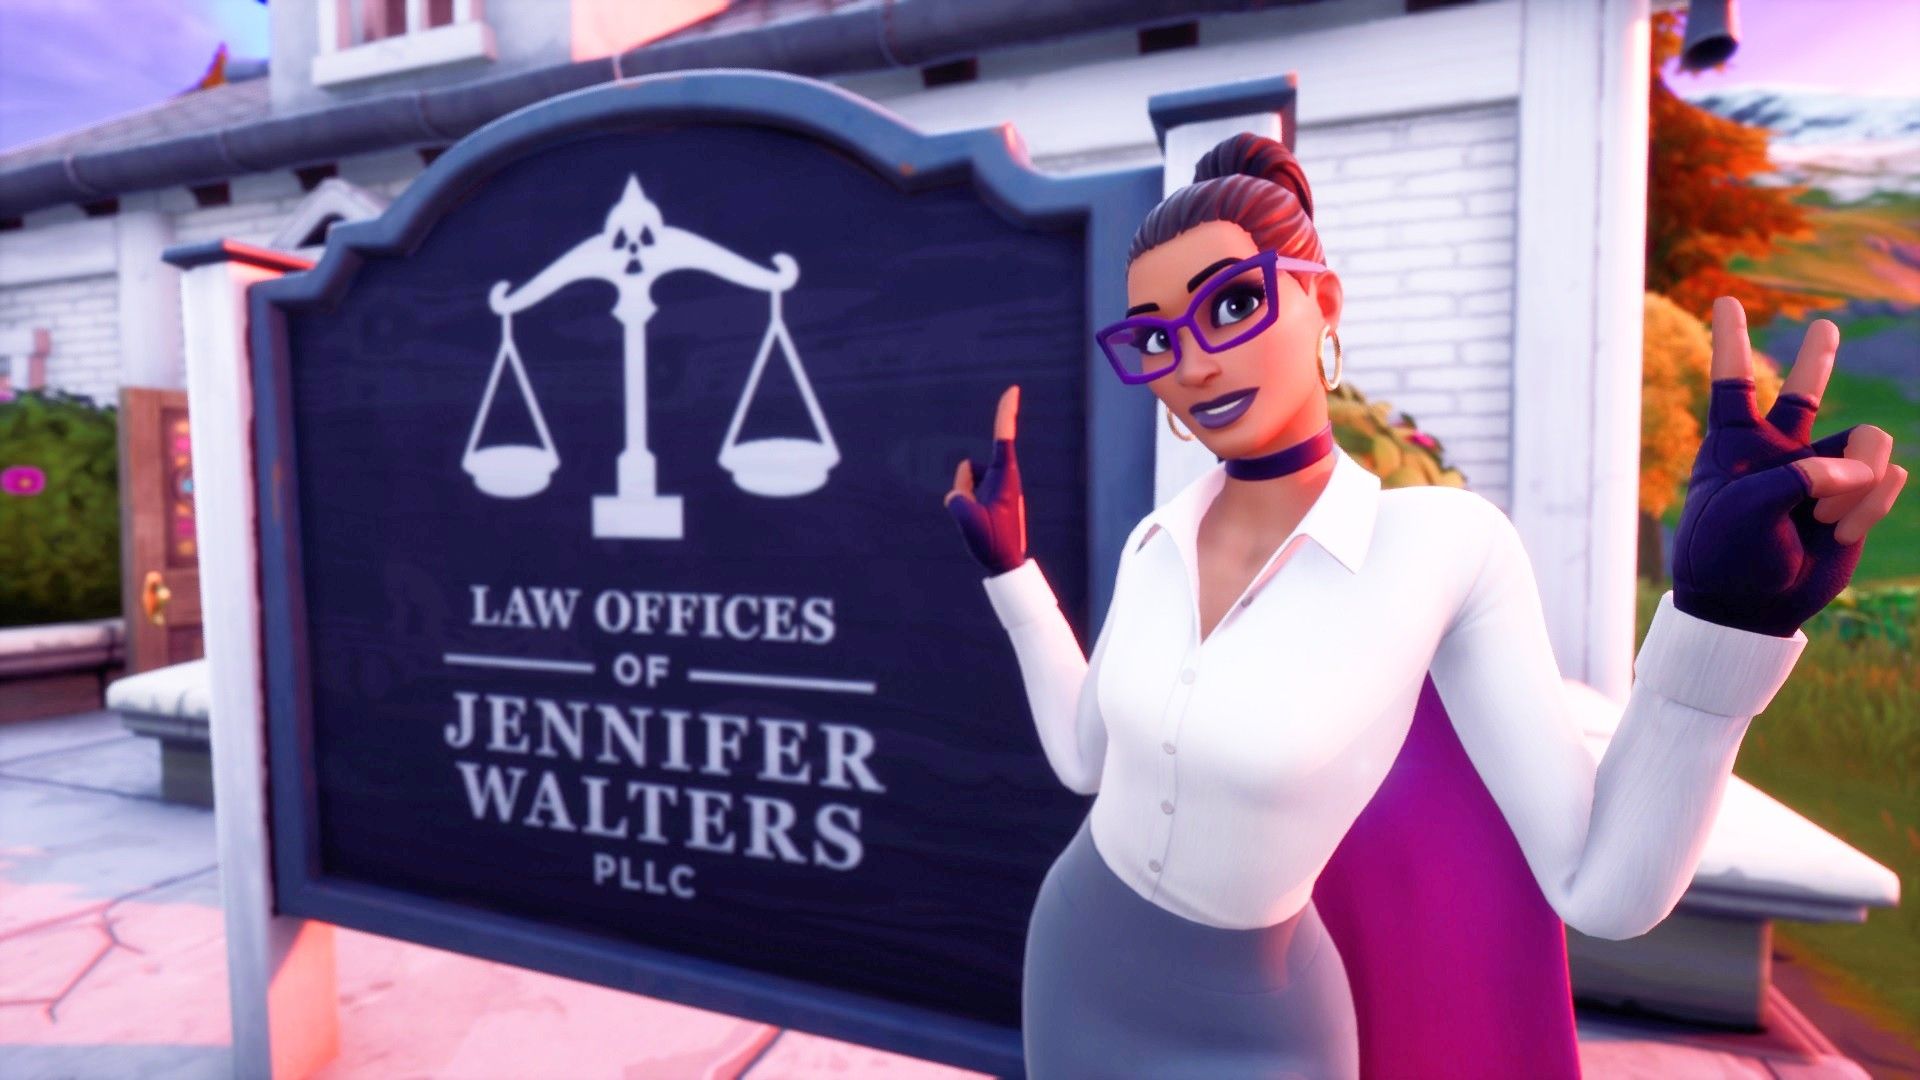 Where to visit Jennifer Walter's office in Fortnite